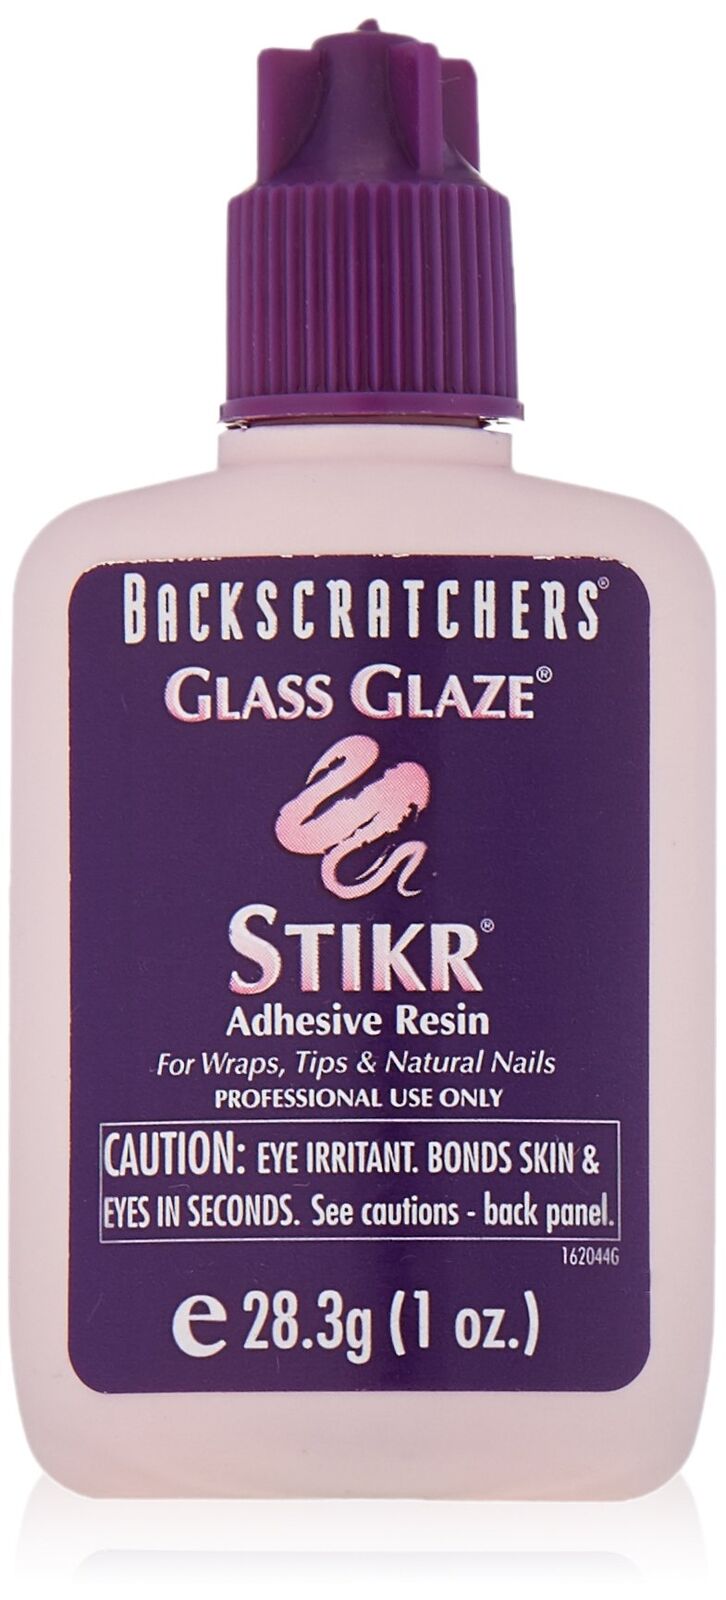 Backscratchers Extreme Glass Glaze Stikr Adhesive Resin, 1 Fluid Ounce